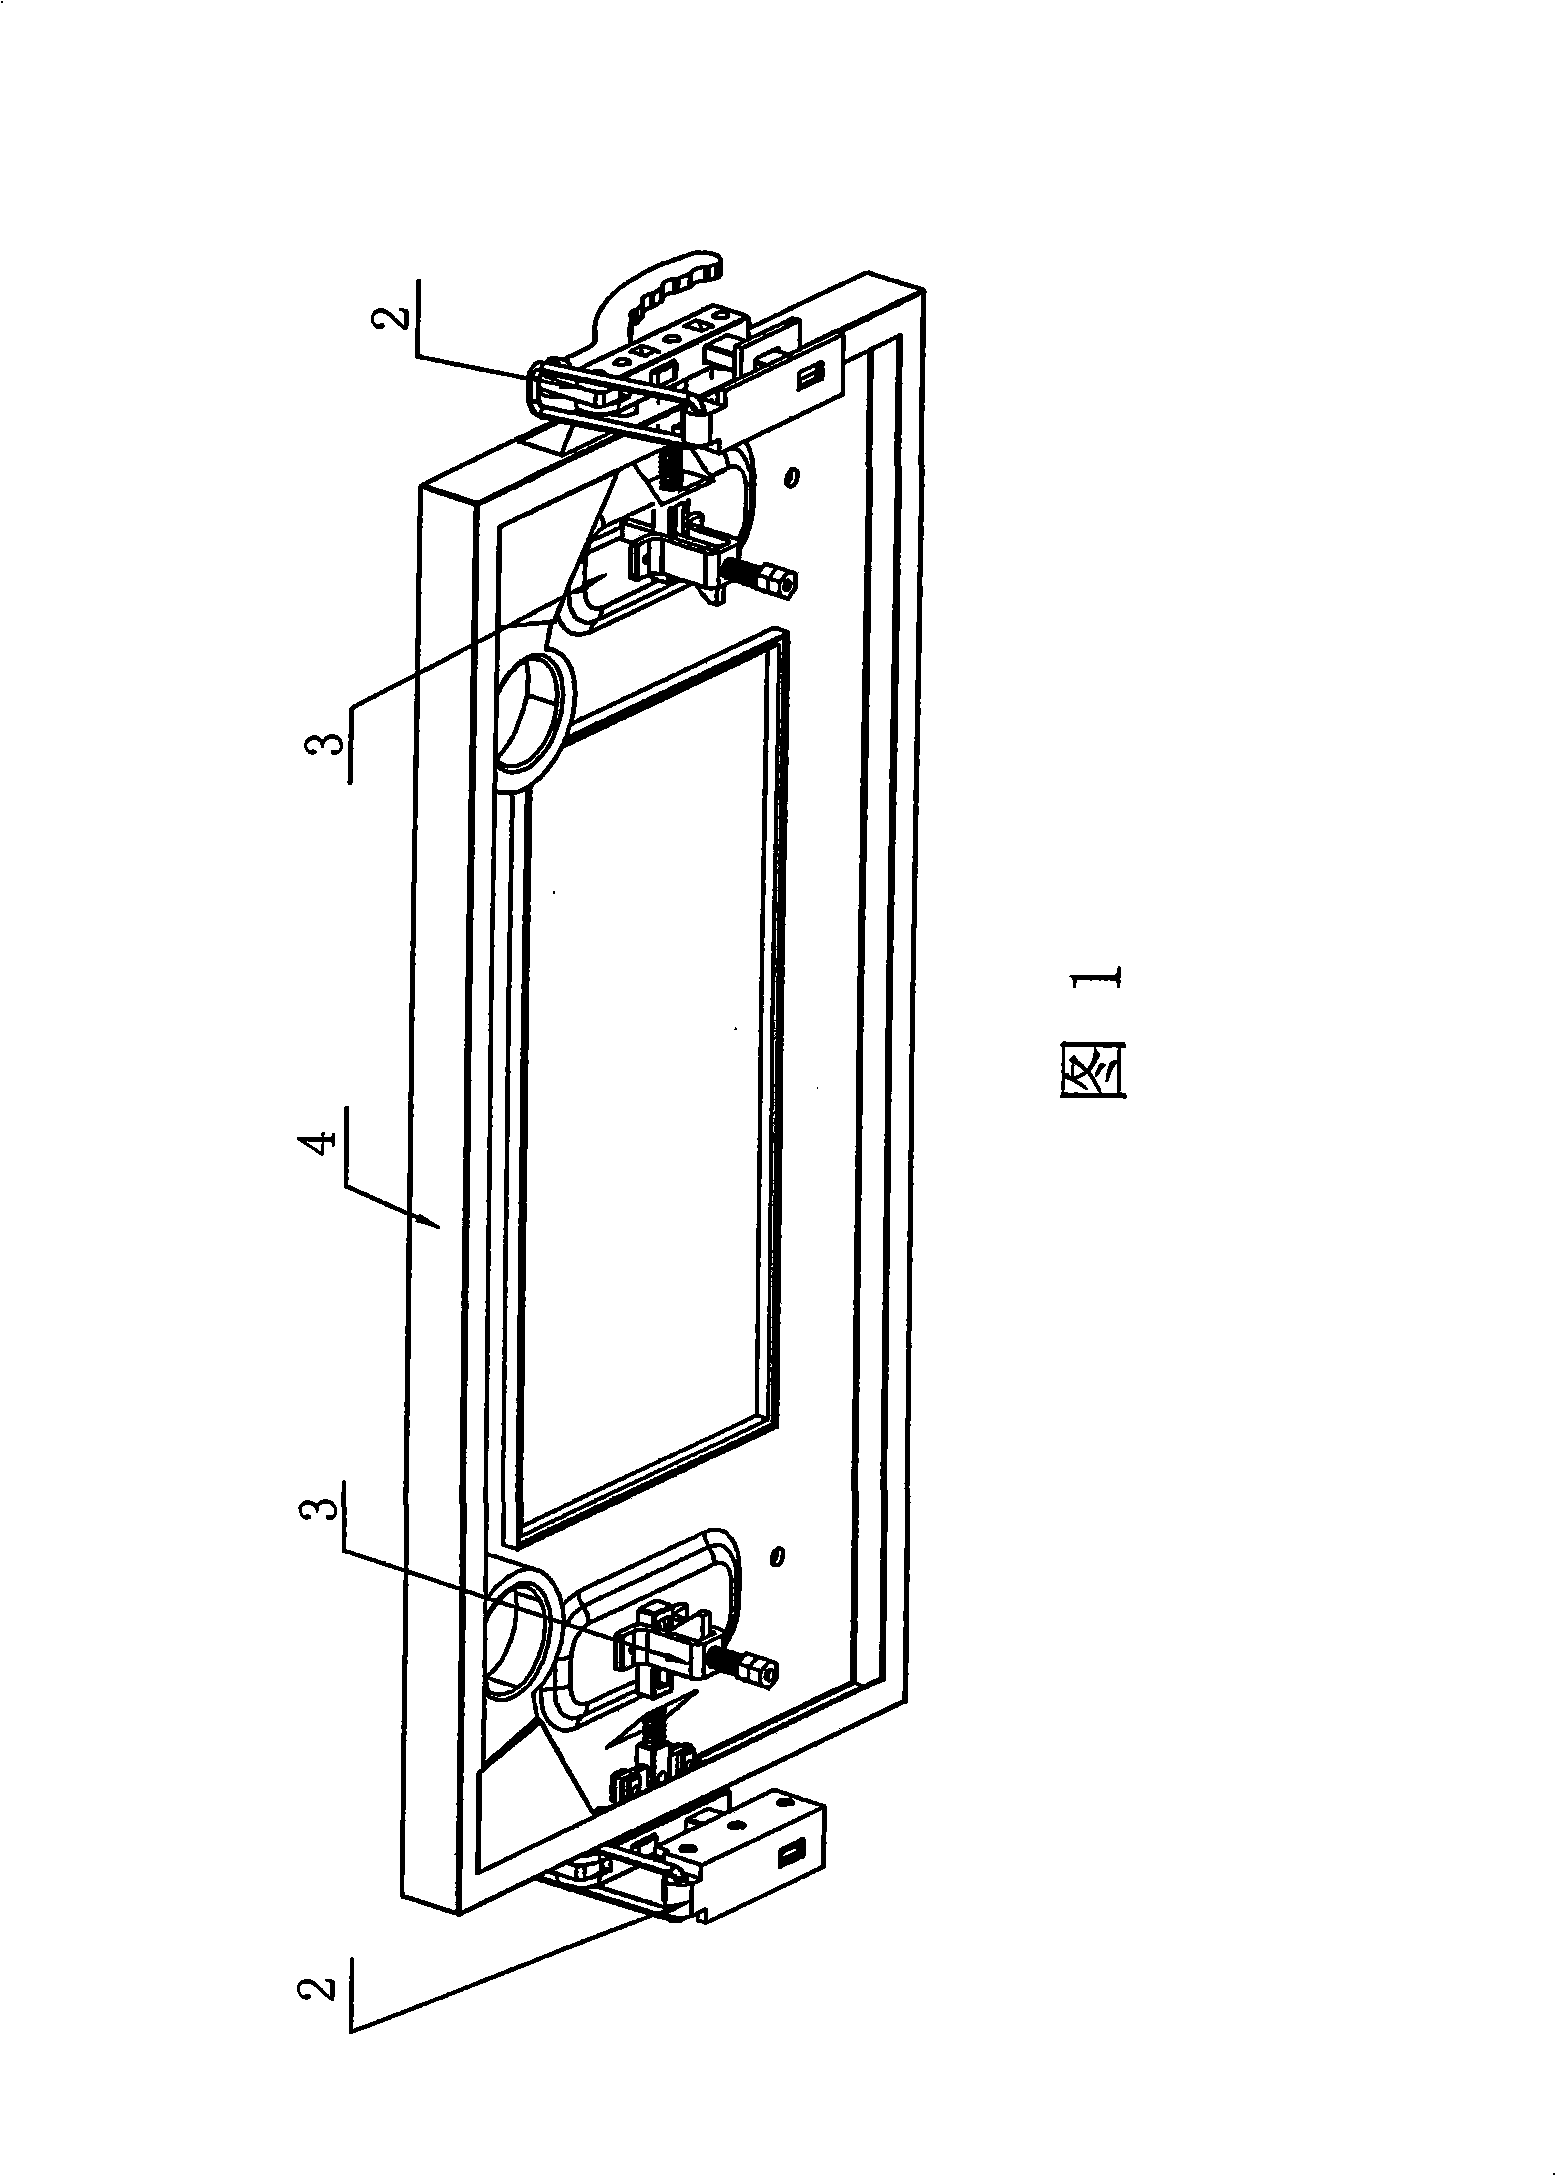 Twin-lock quick-release locking mechanism